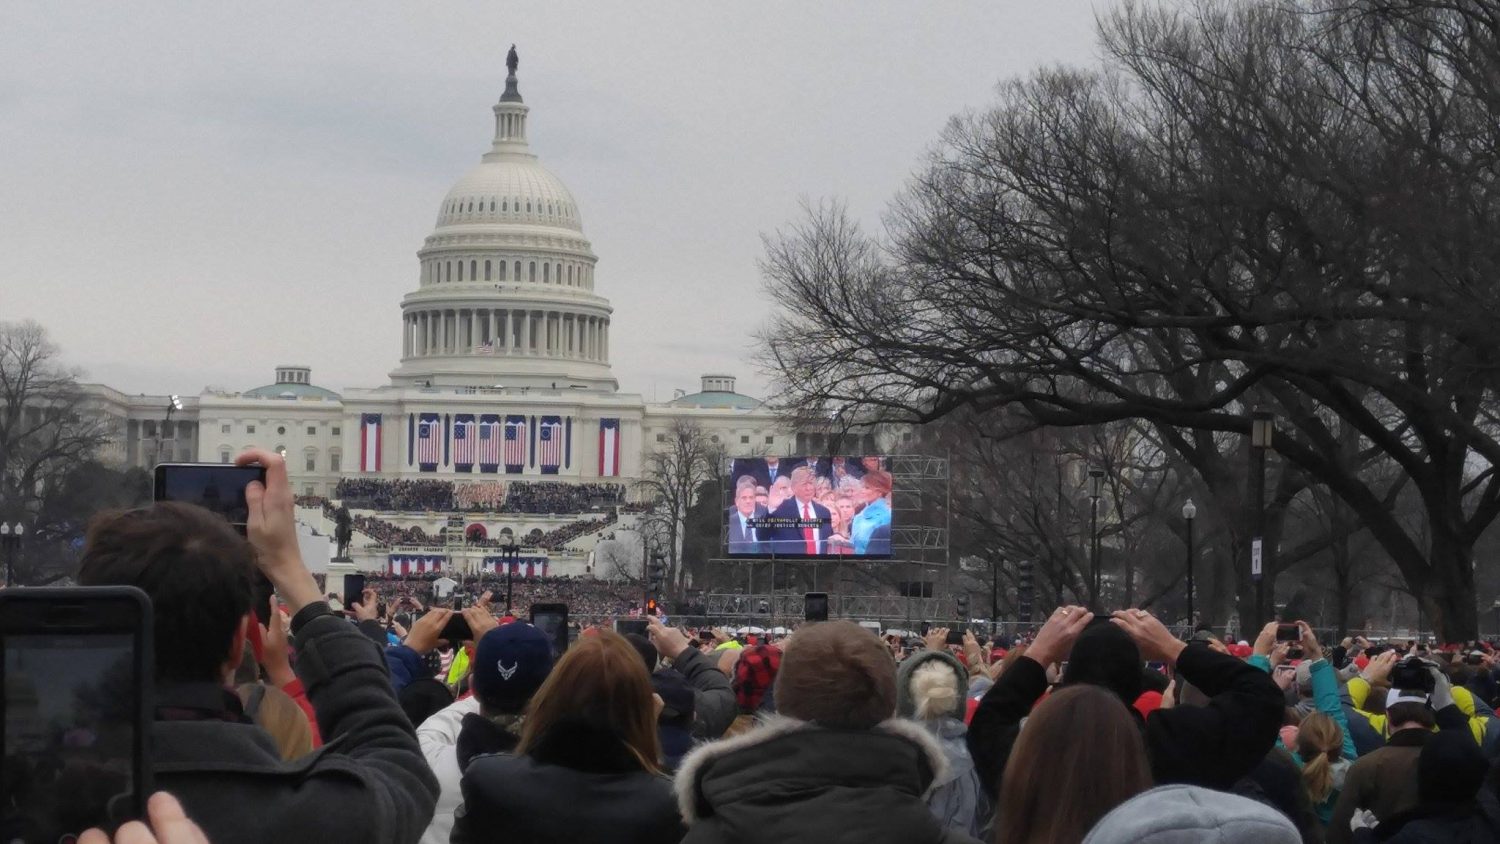 Presidential inauguration proves memorable for Merrill couple